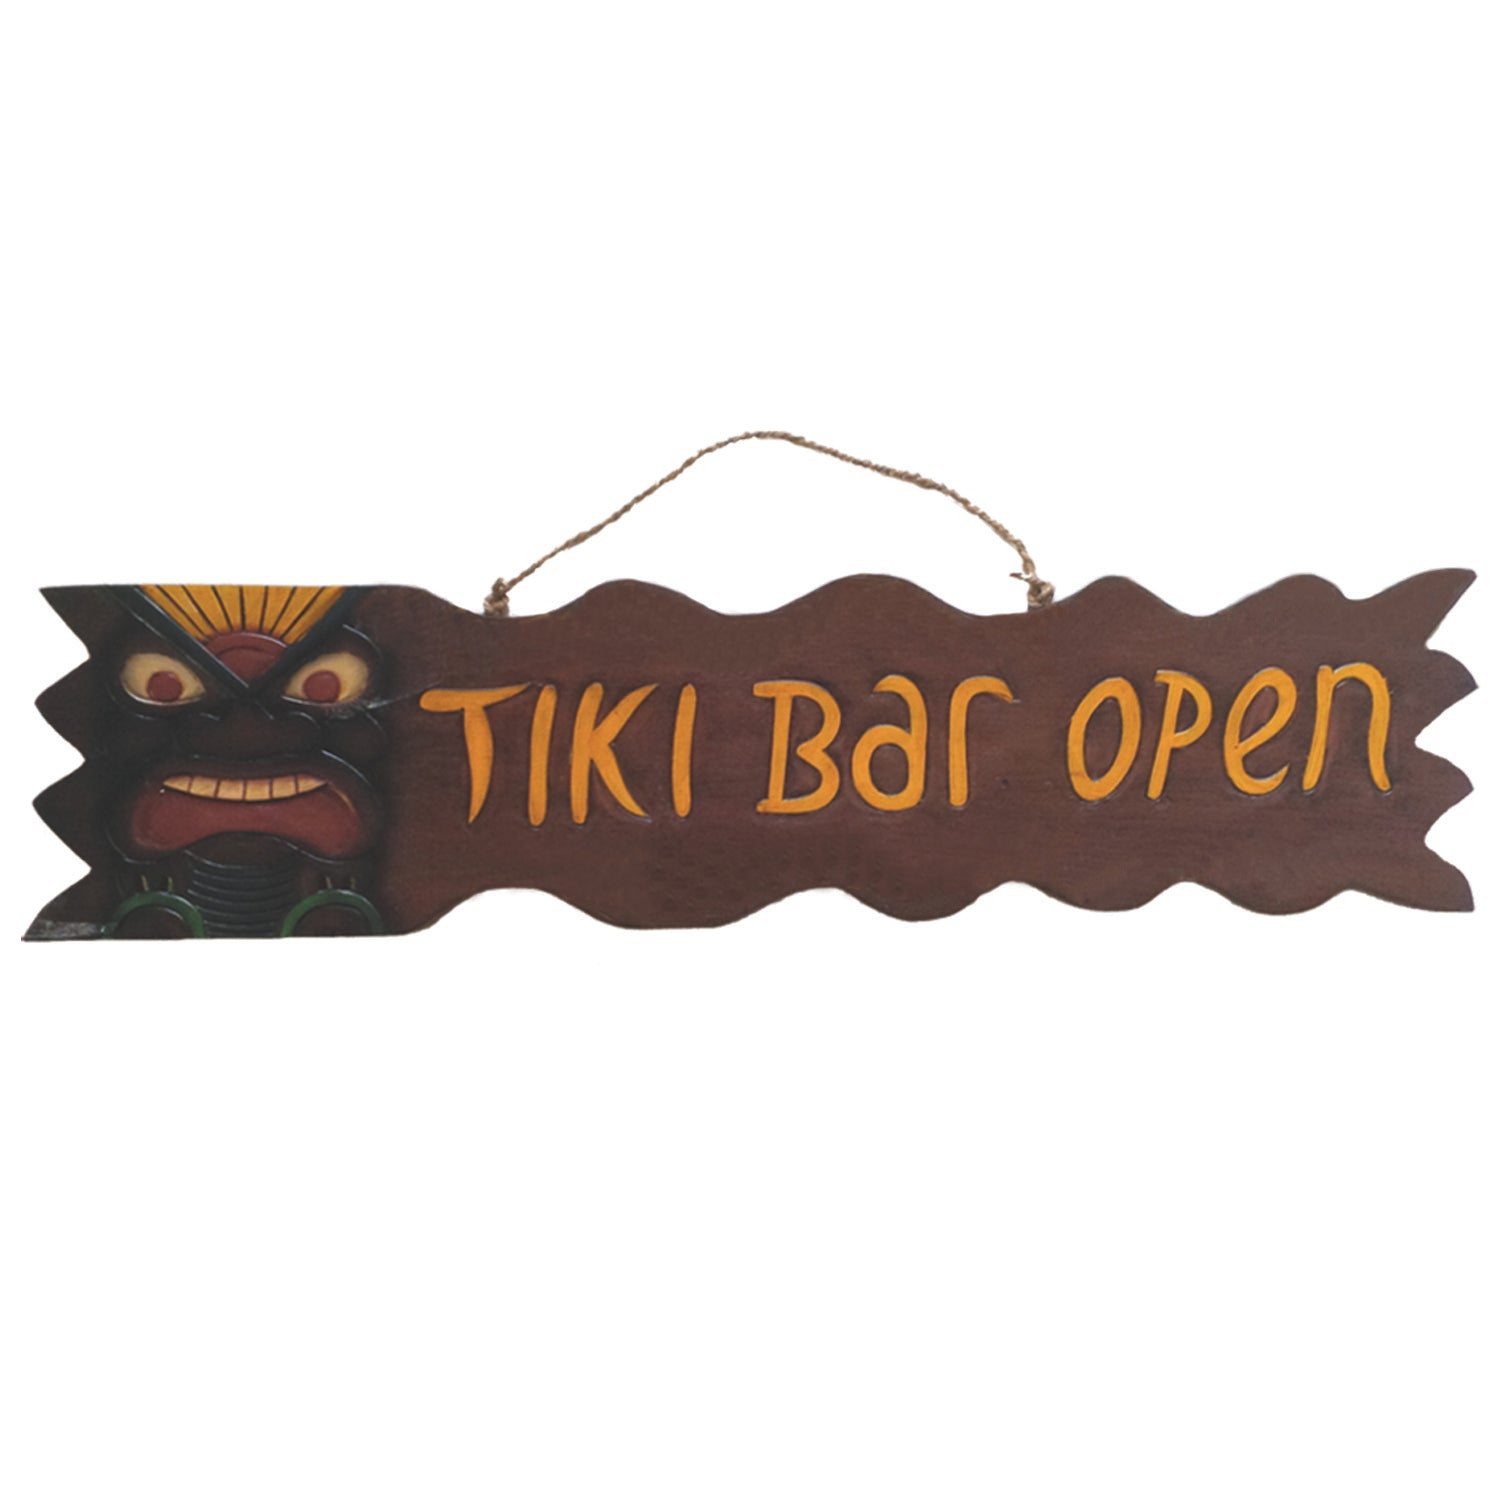 RAM Game Room “Tiki Bar Open” Wall Art